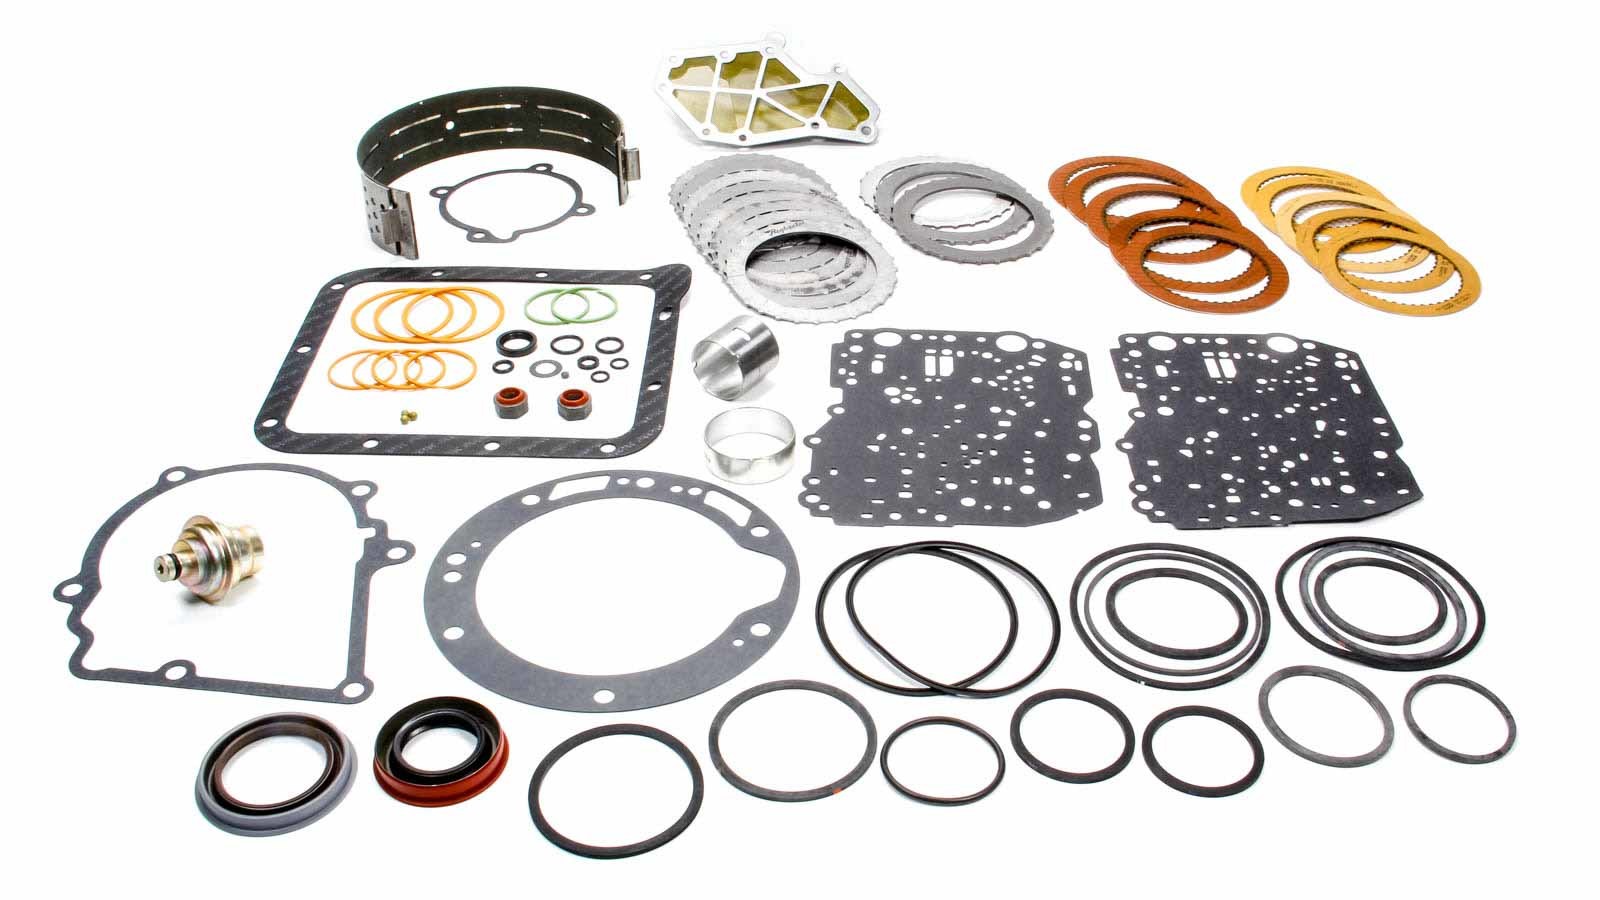 Performance Automatic PAKT26701 Transmission Rebuild Kit, Automatic, Race Overhaul, Clutches / Steels / Bands / Filter / Gaskets / Seals, C4, Kit